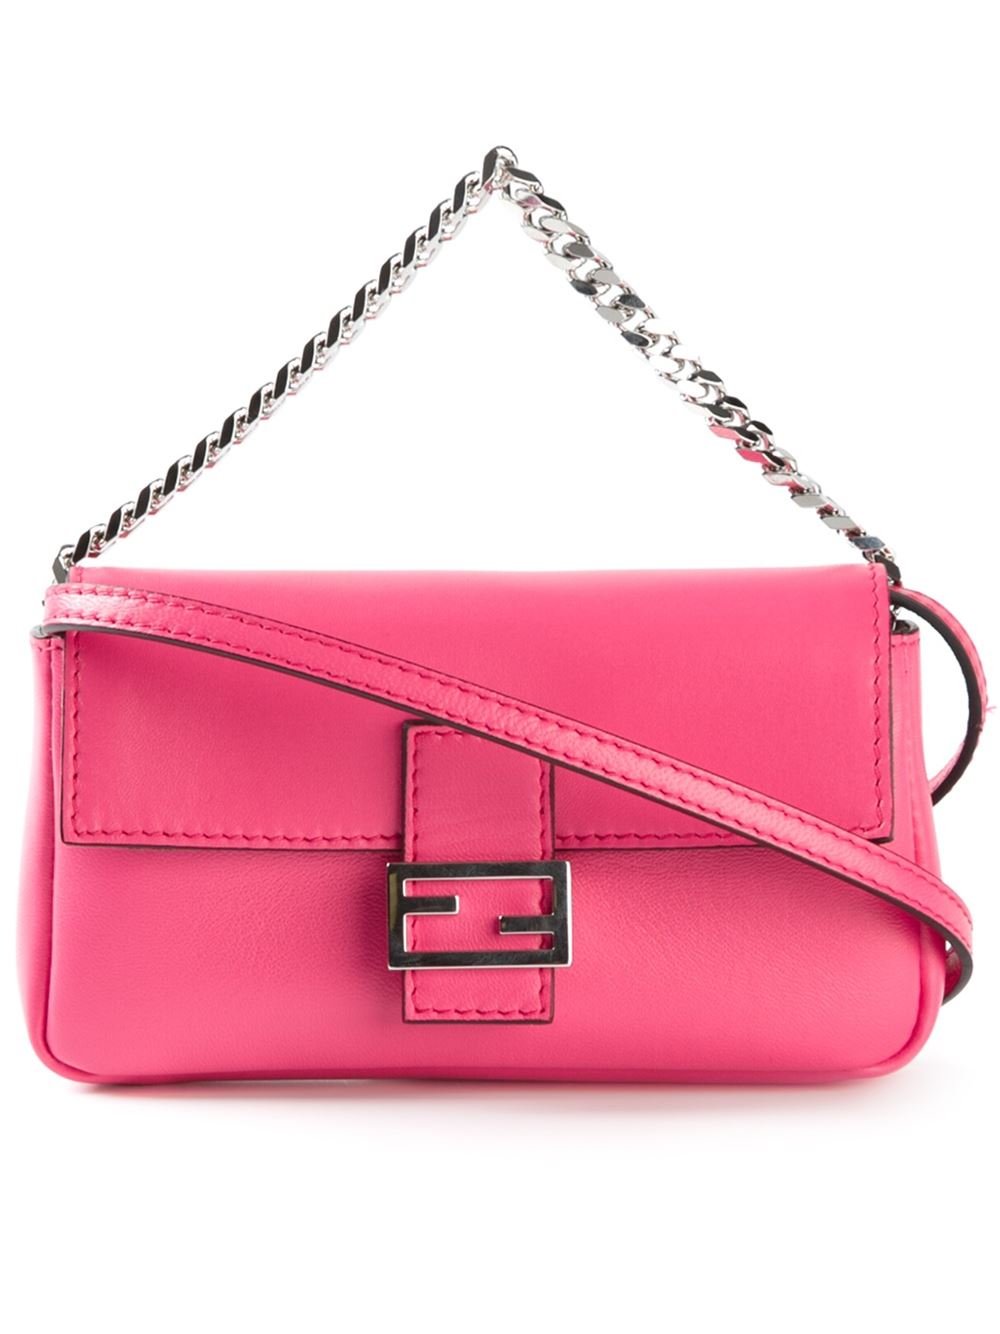 Fendi Micro Baguette Cross-Body Bag in Pink | Lyst